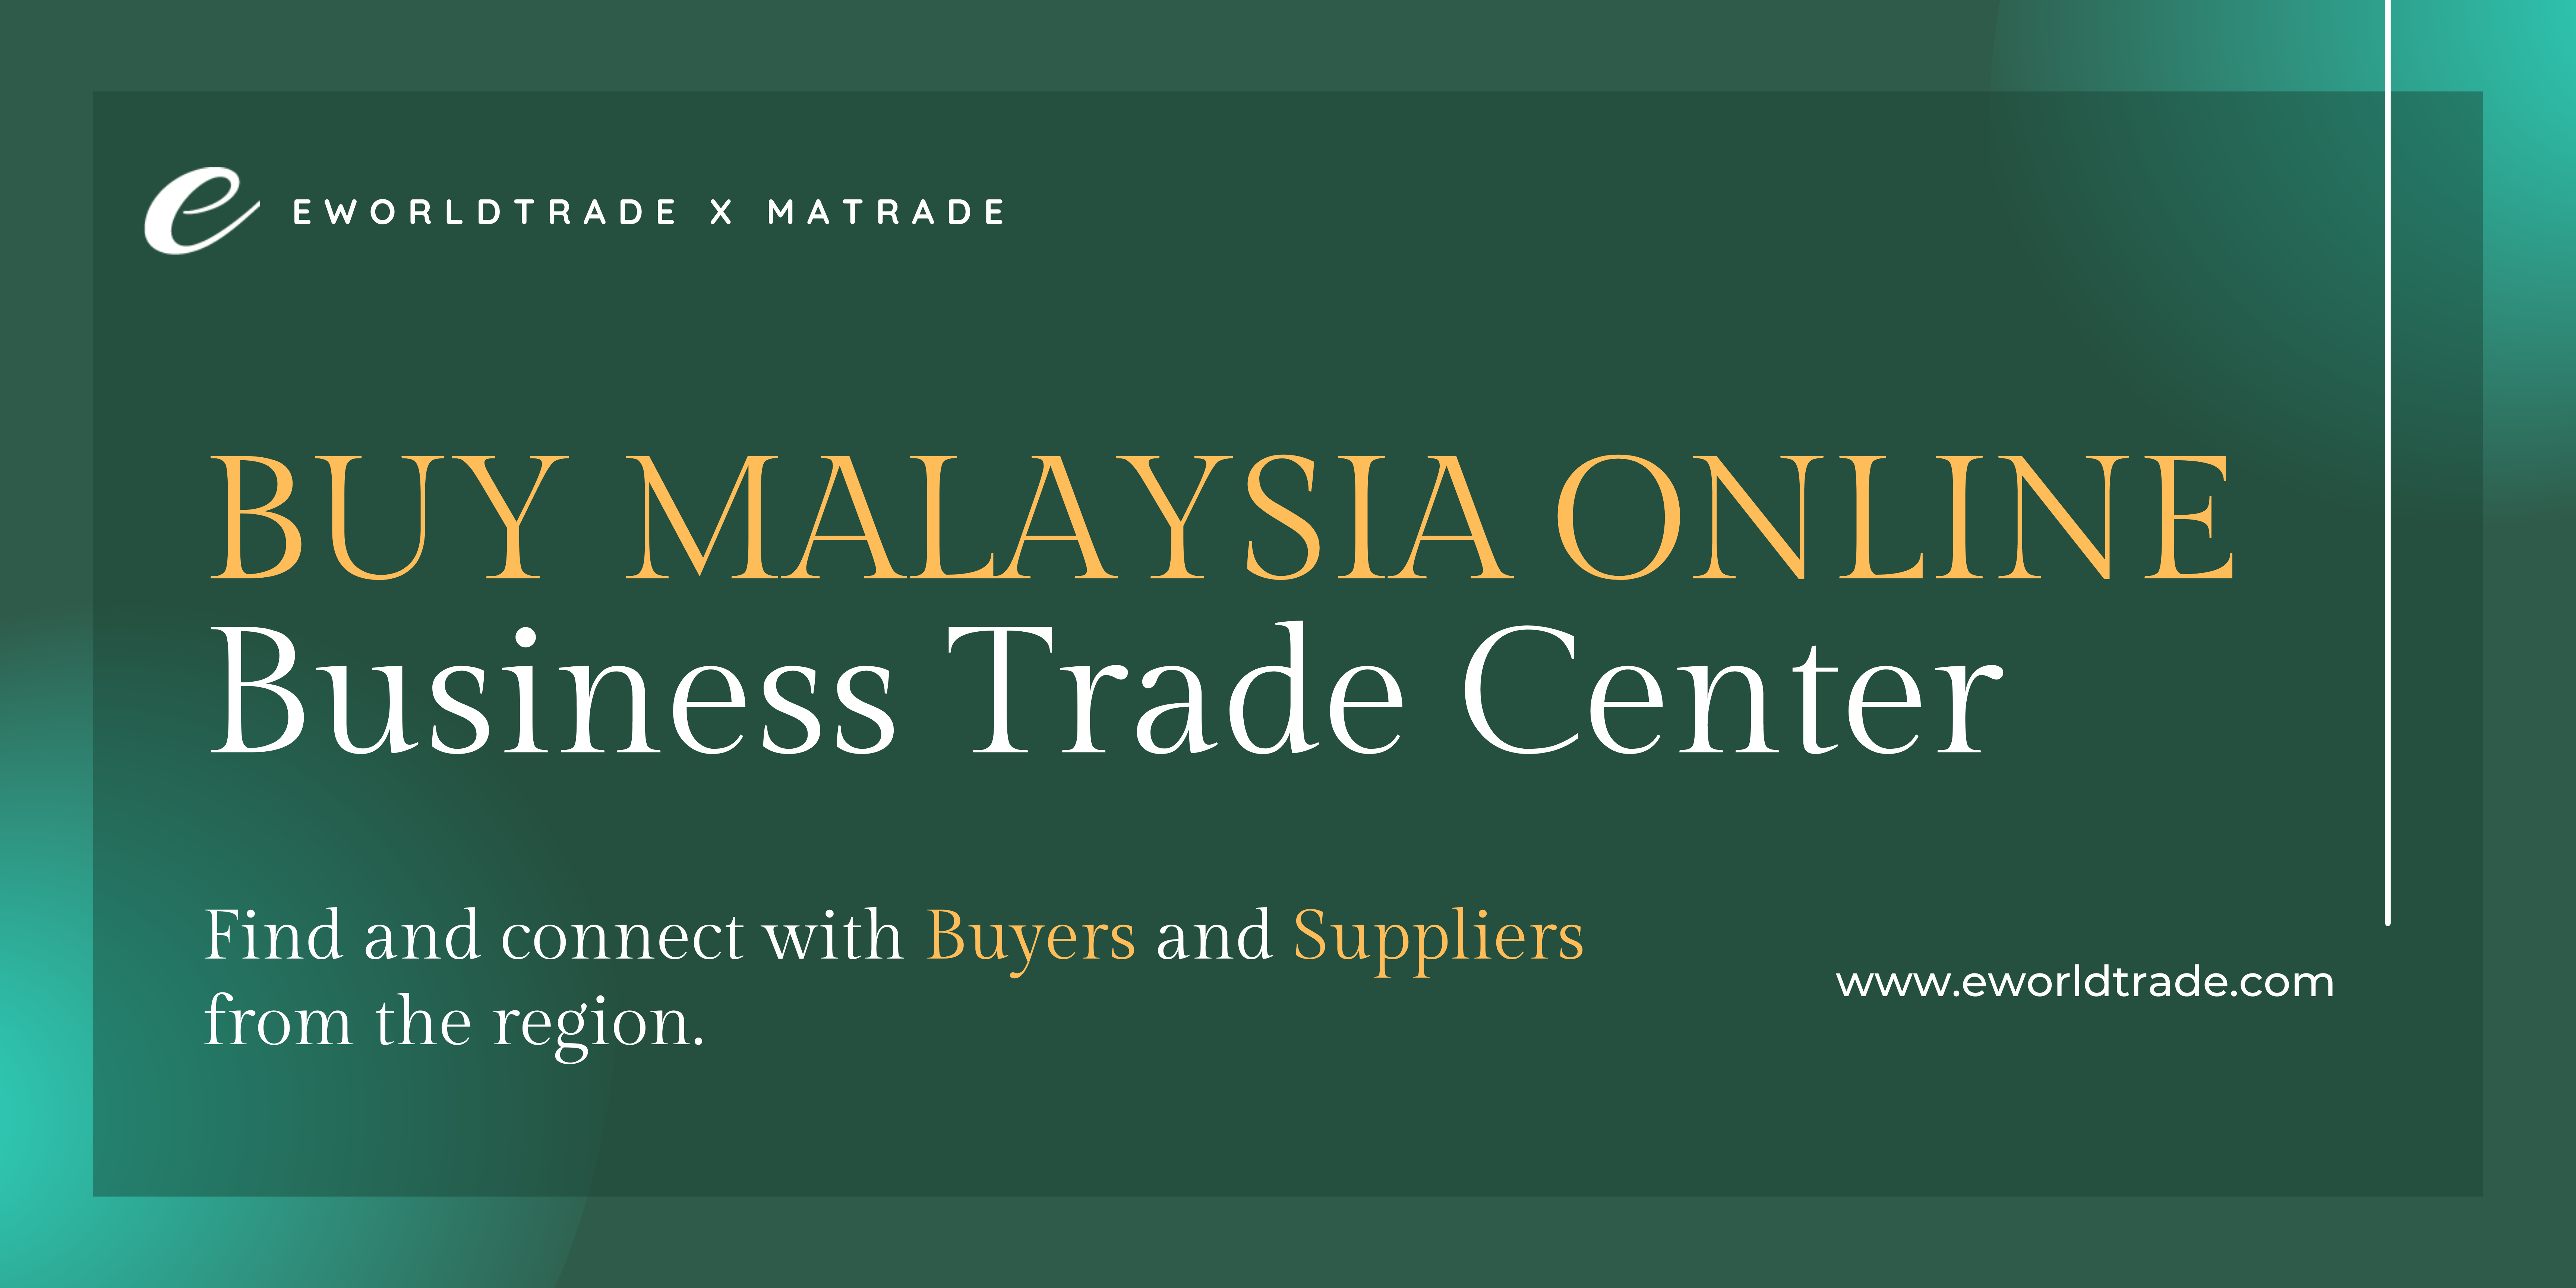 Asia’s Most Influential Partnership between eWorldTrade and the Malaysia External Trade Development Corporation (MATRADE)